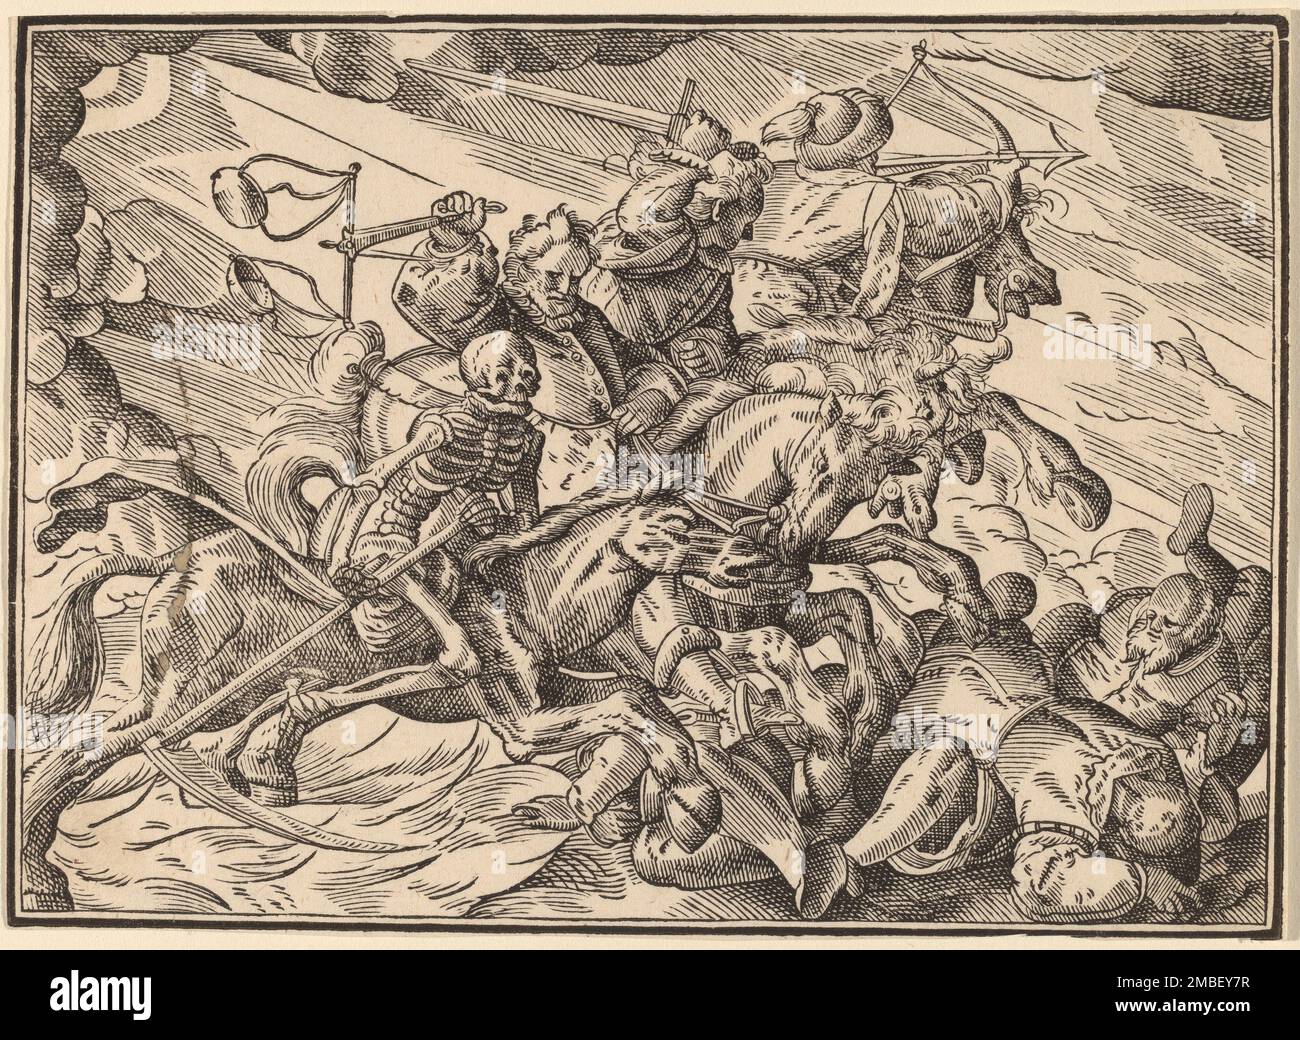 The Four Horsemen of the Apocalypse, published 1630. Stock Photo